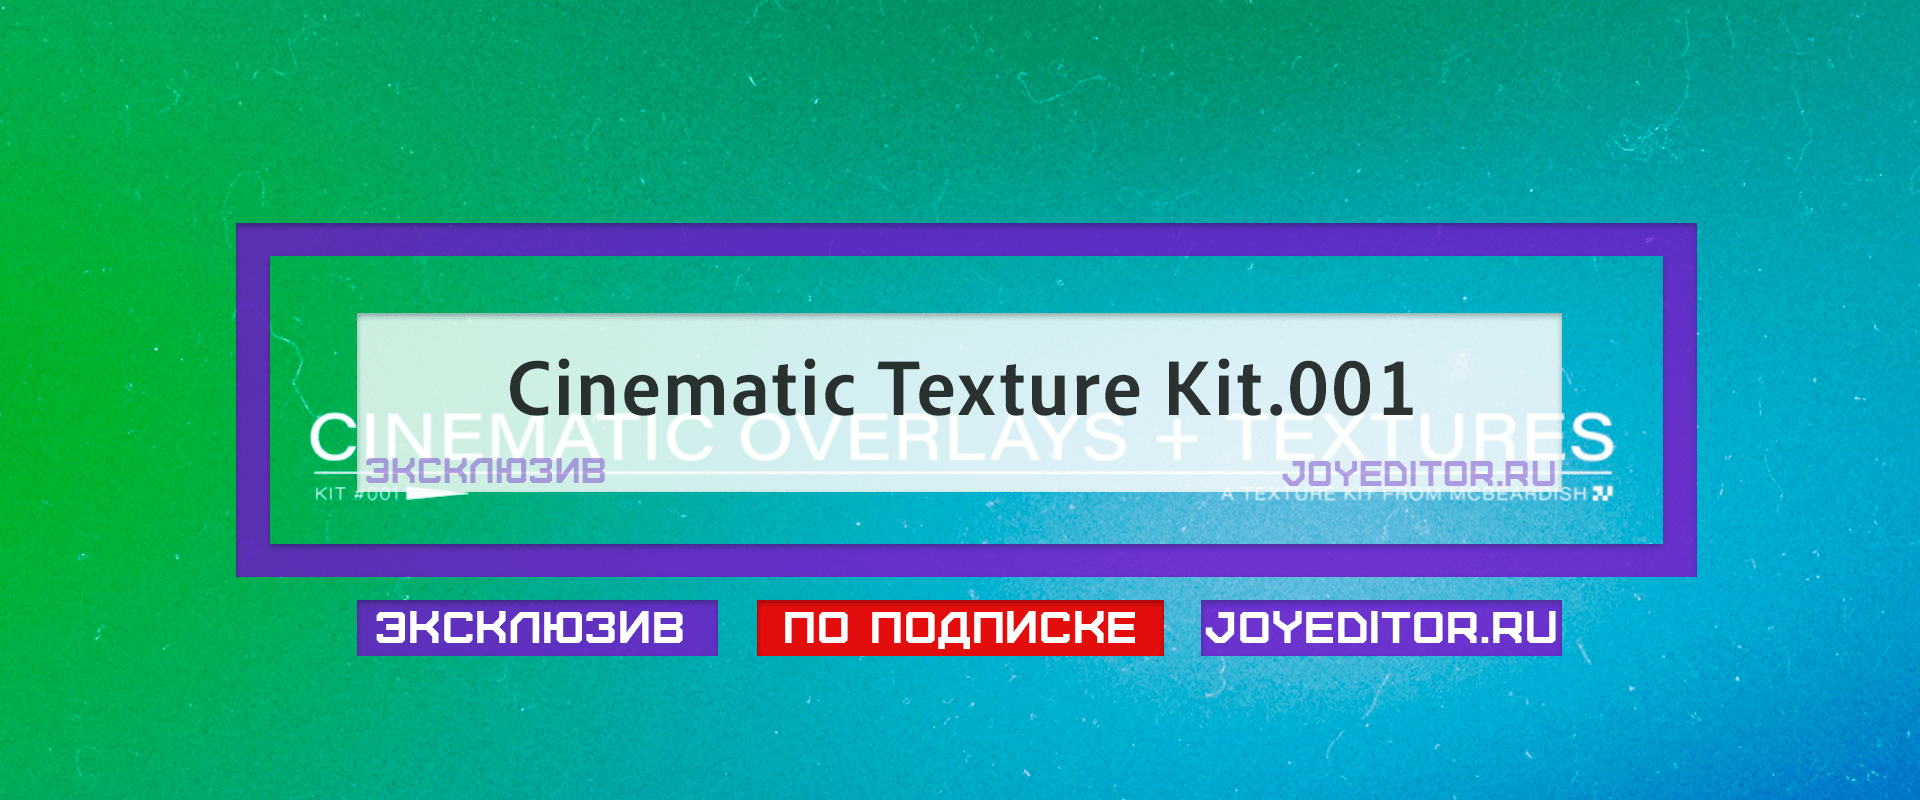 Cinematic Texture Kit.001